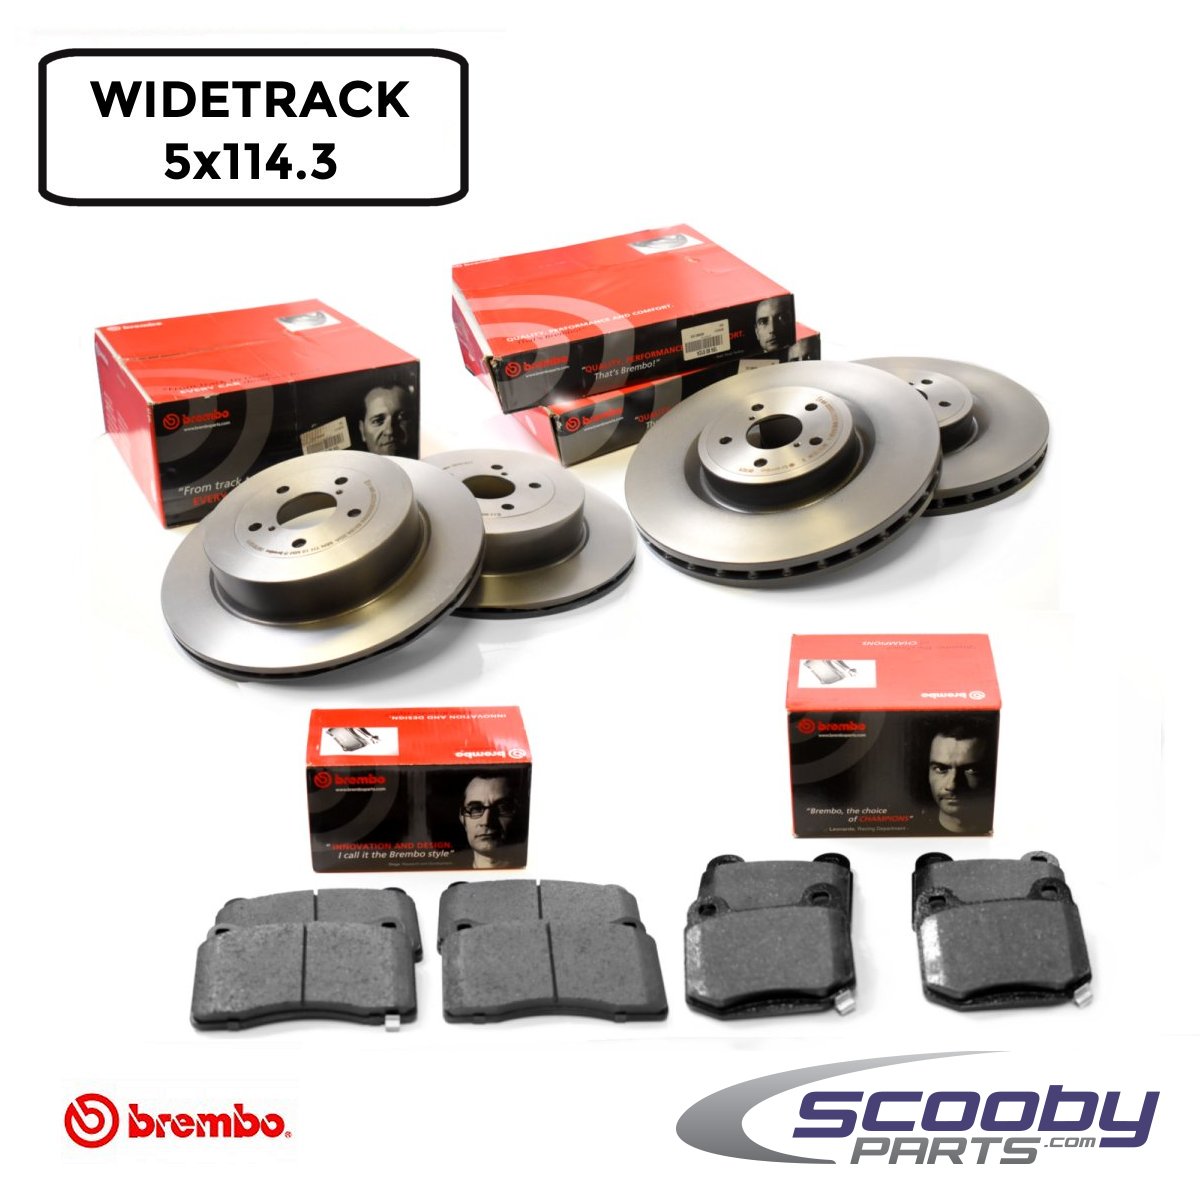 Brembo Front & Rear Brake Discs & Pads Pack Subaru Impreza STI 2005-2007 Widetrack 5x114.3_1